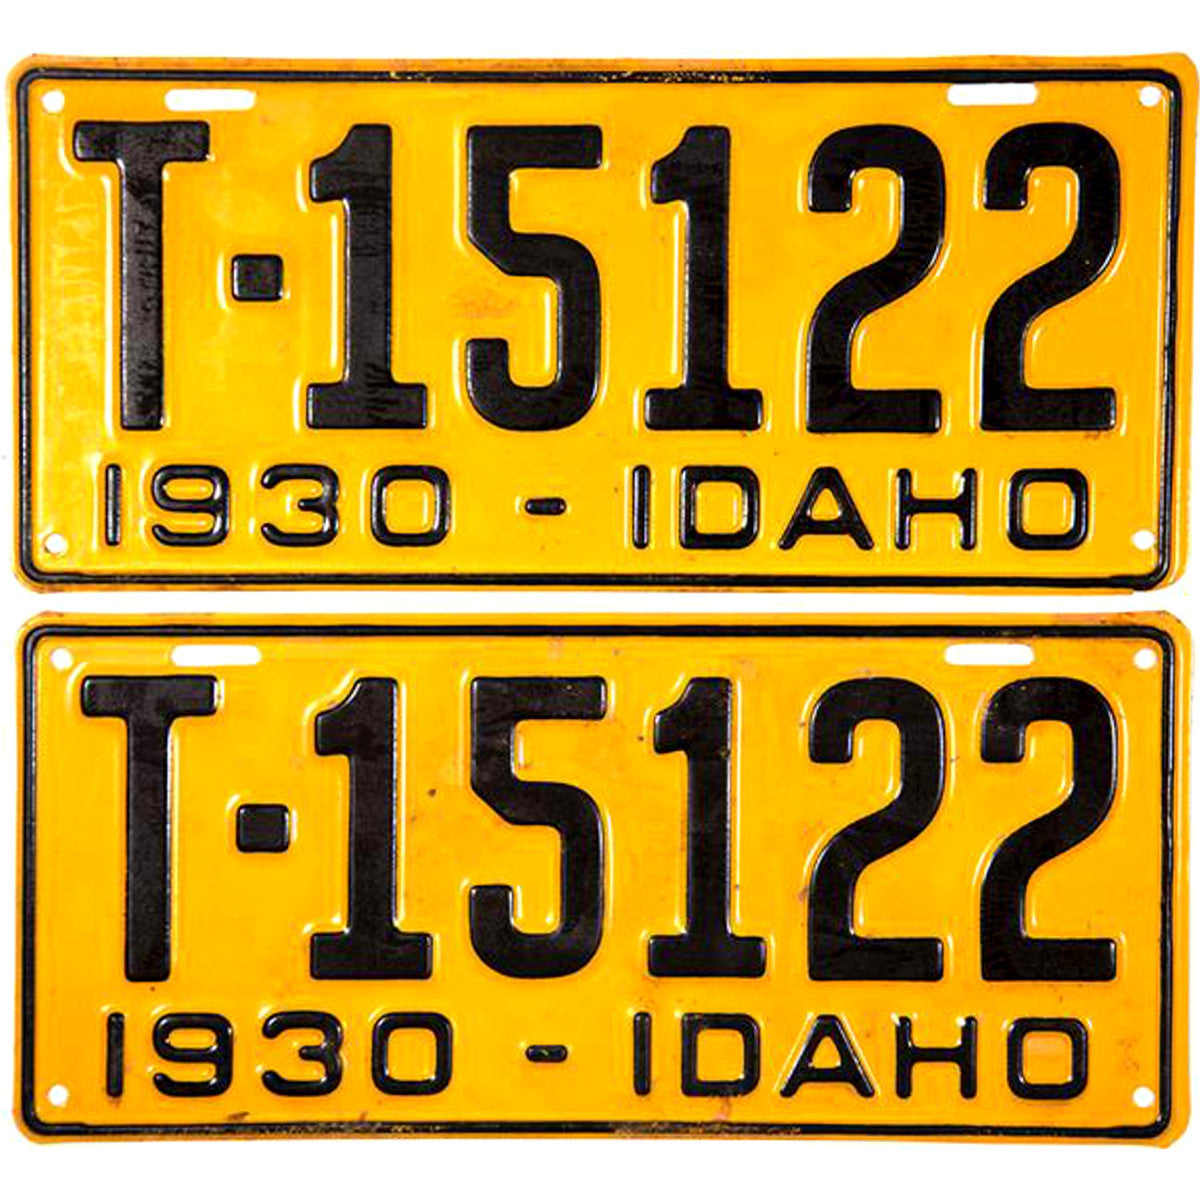 1930 Idaho Truck License Plates